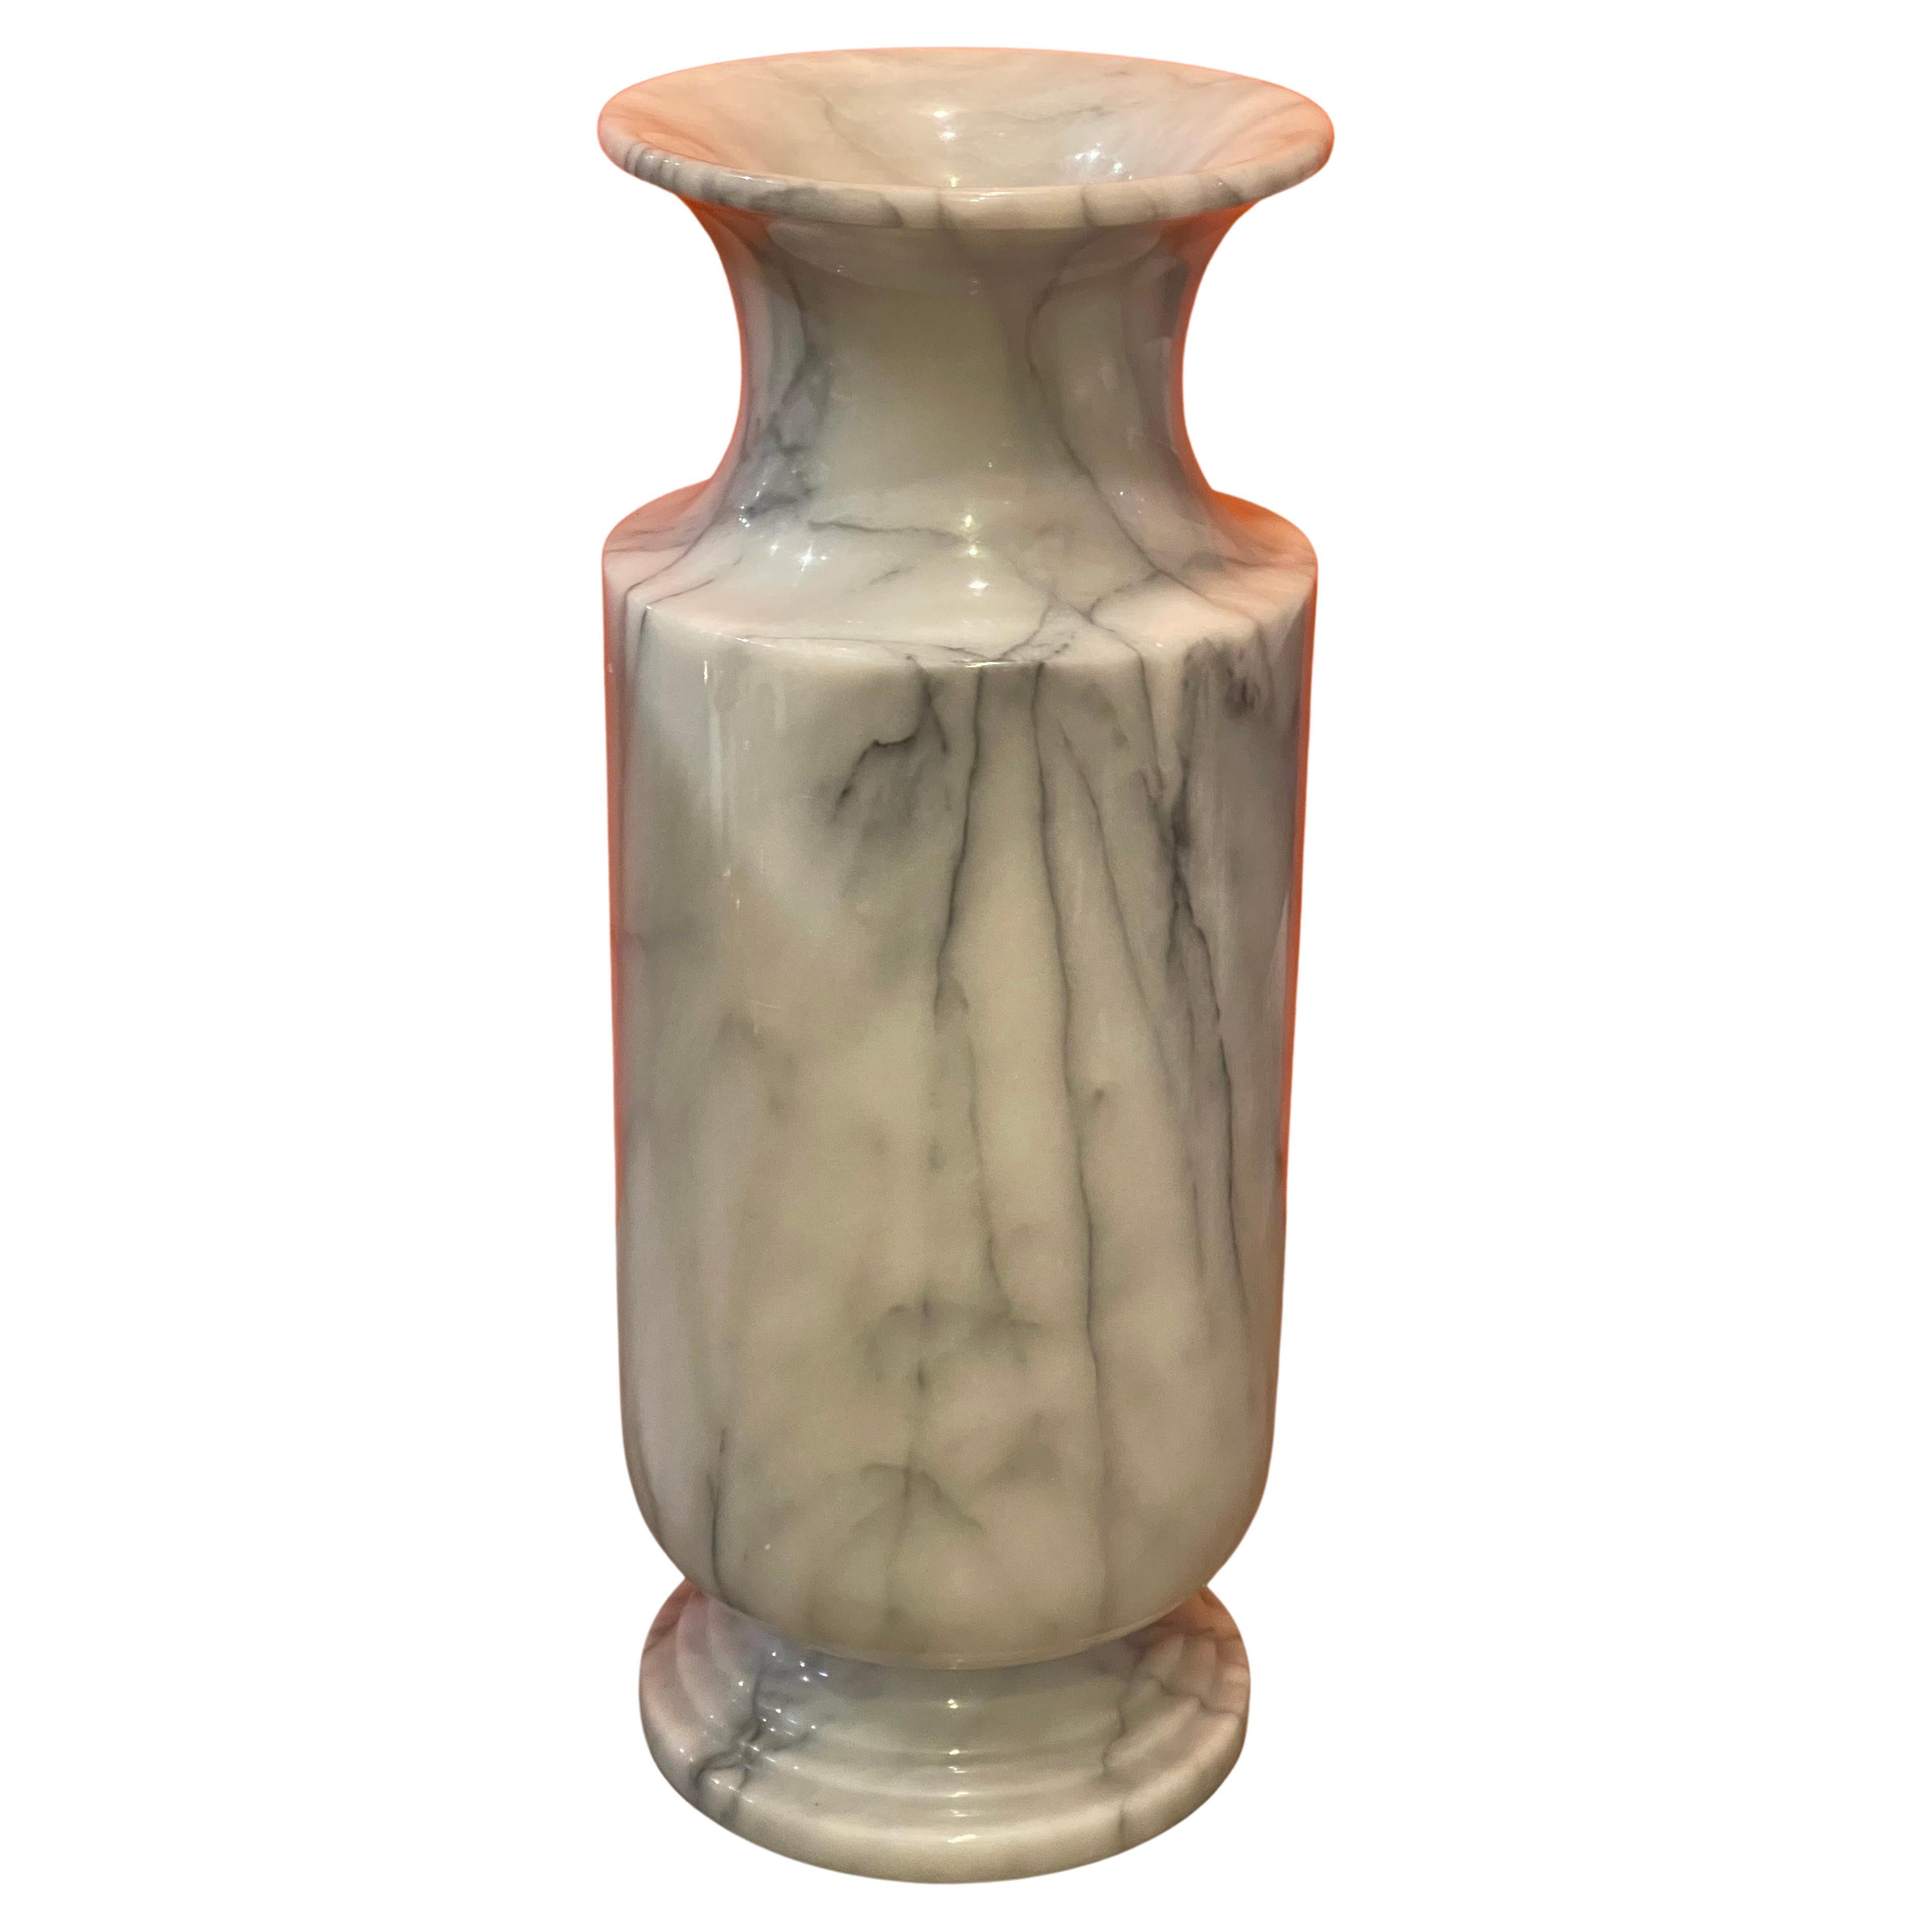 Large Post-Modern Italian Carrara Marble Vase